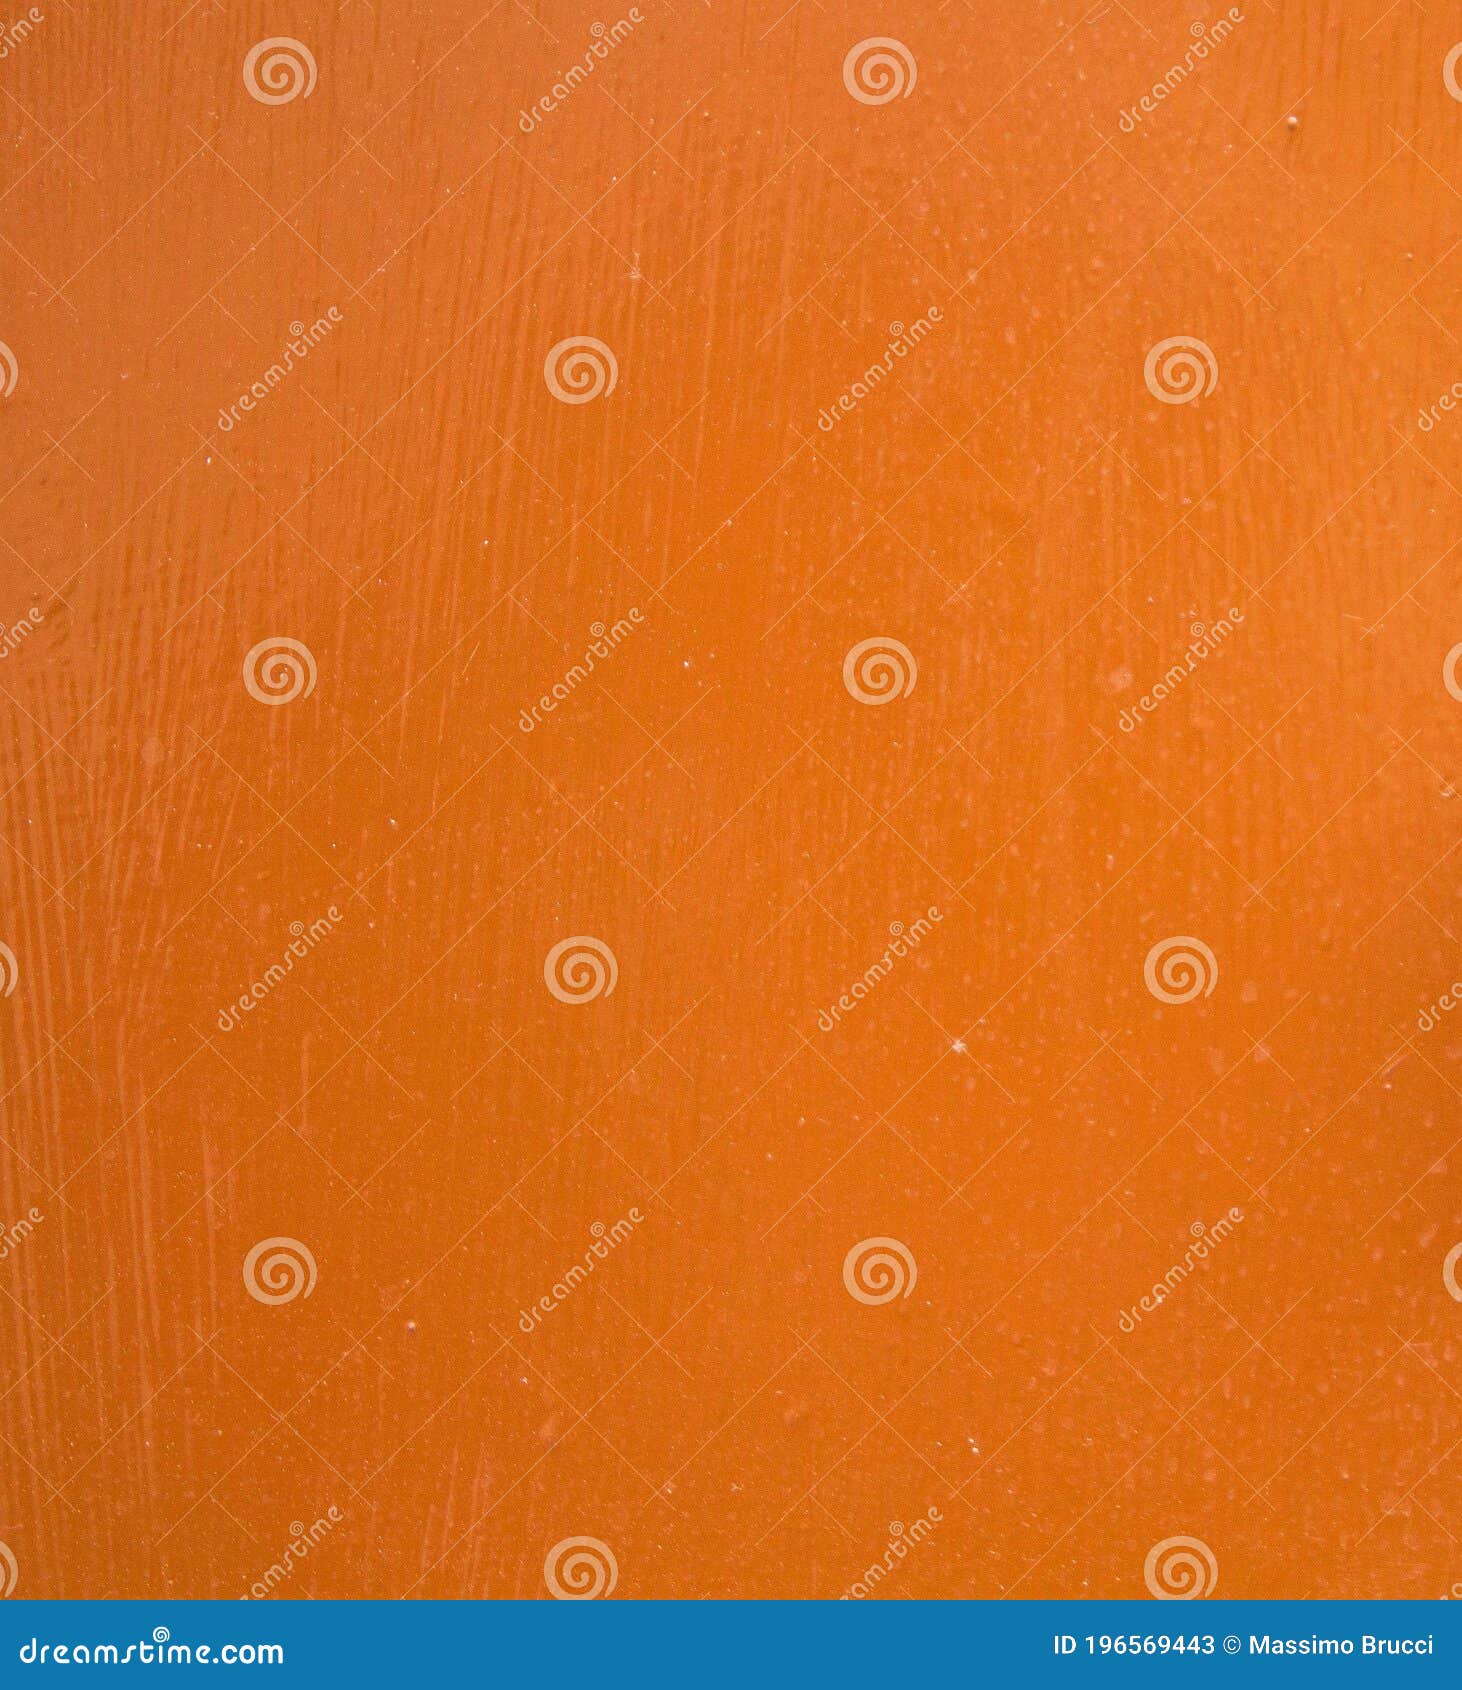 brown or orange iron texture